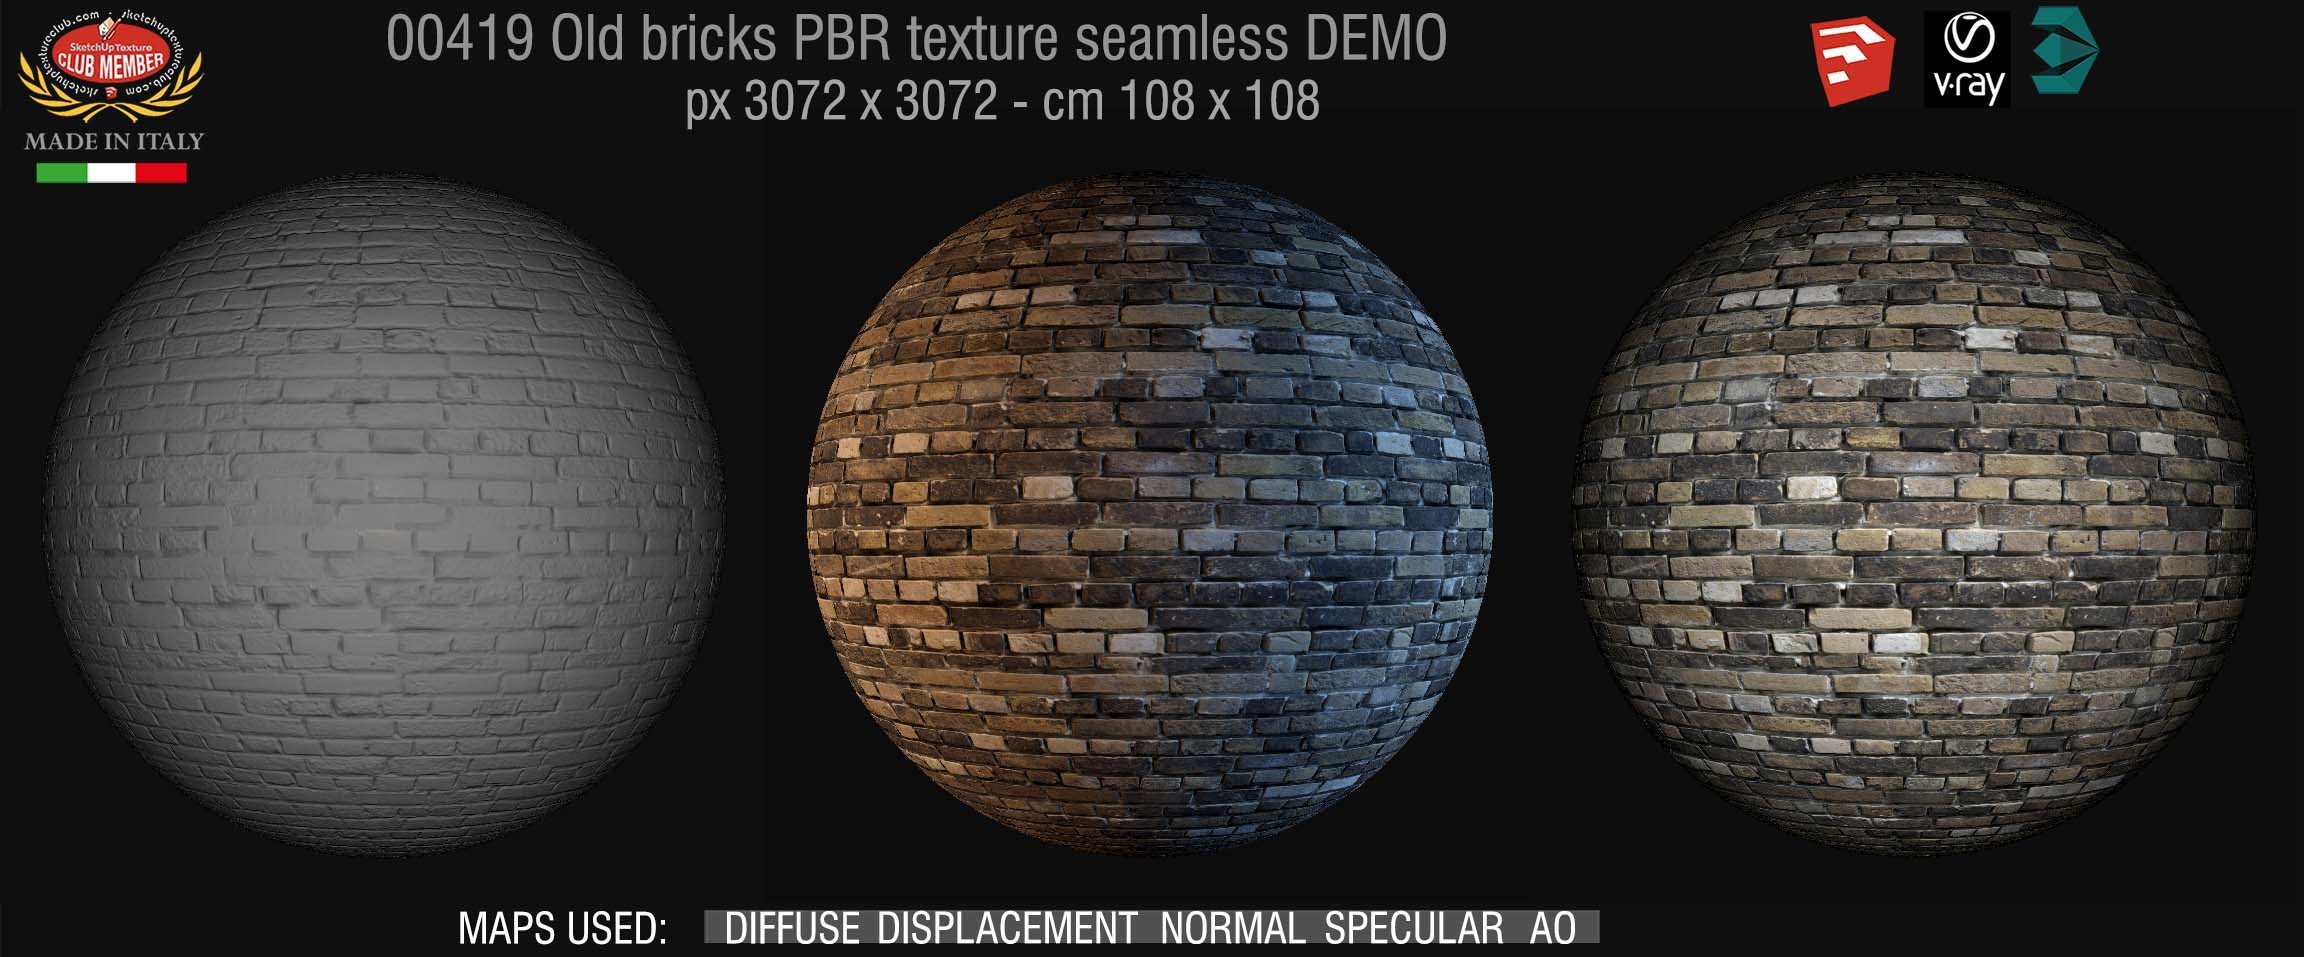 00419 Old bricks PBR texture seamless DEMO